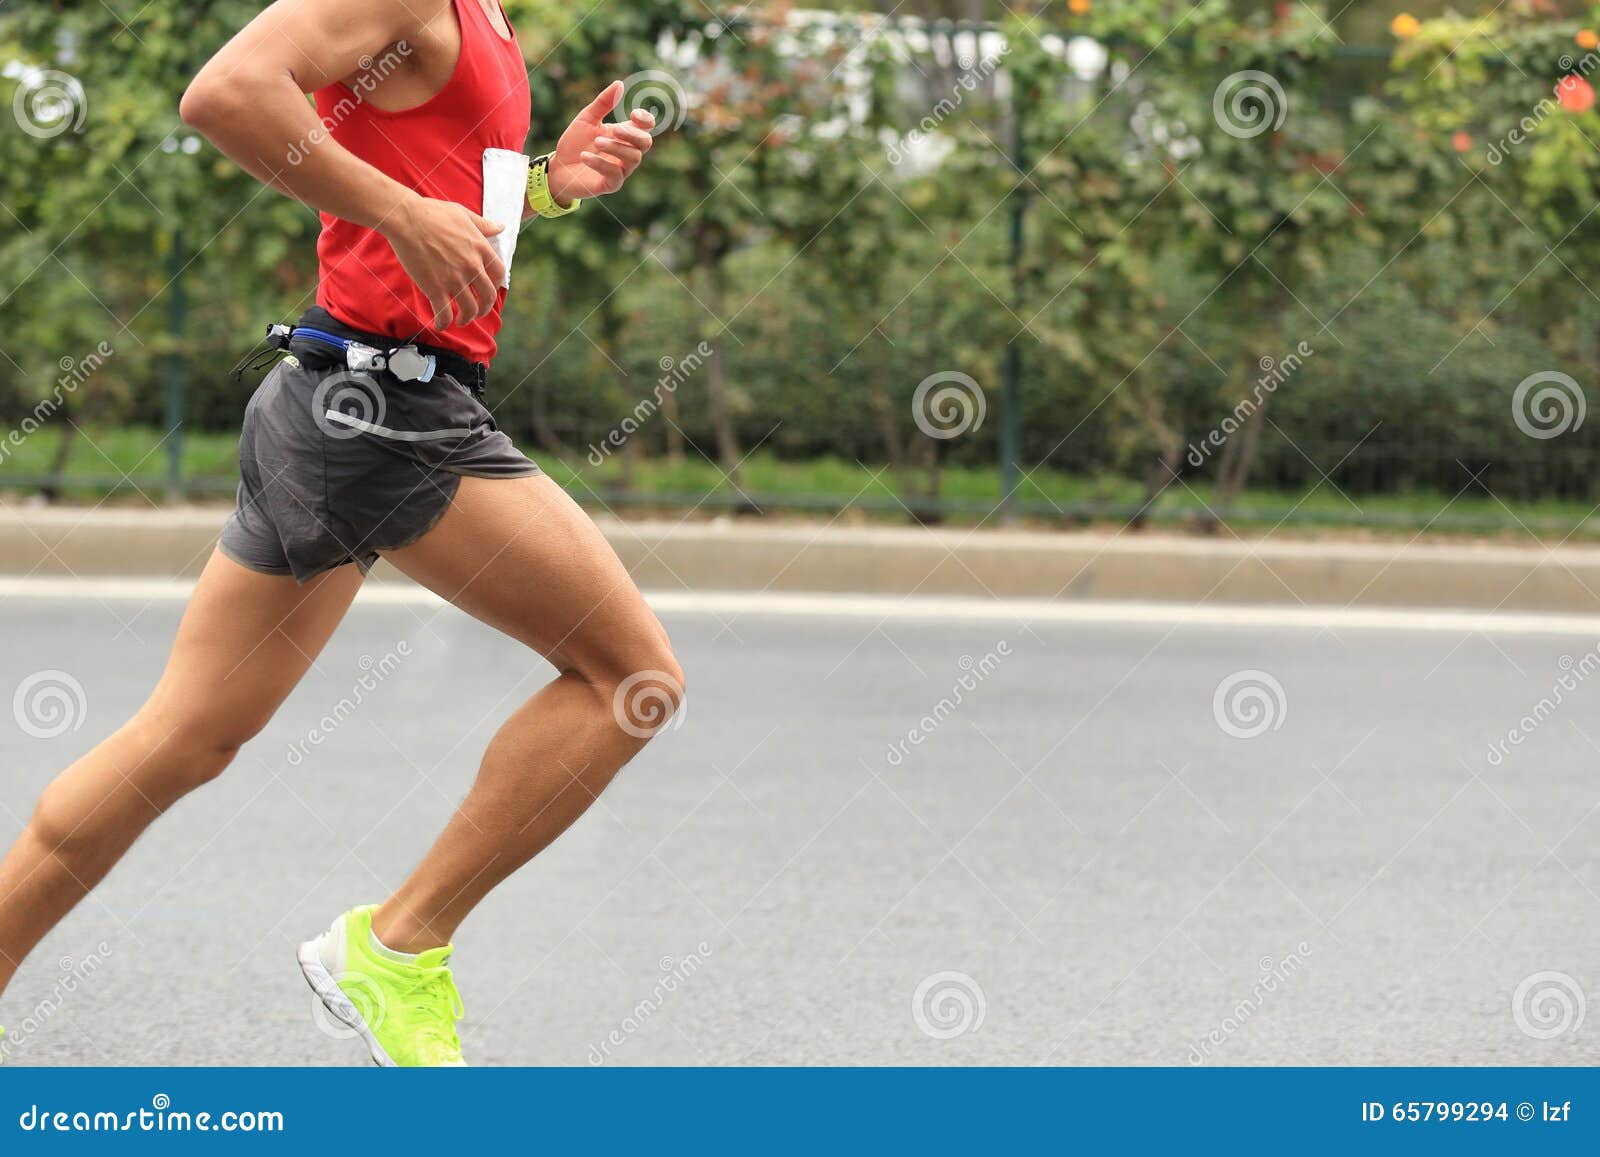 Marathon runner running stock photo. Image of green, copy - 65799294